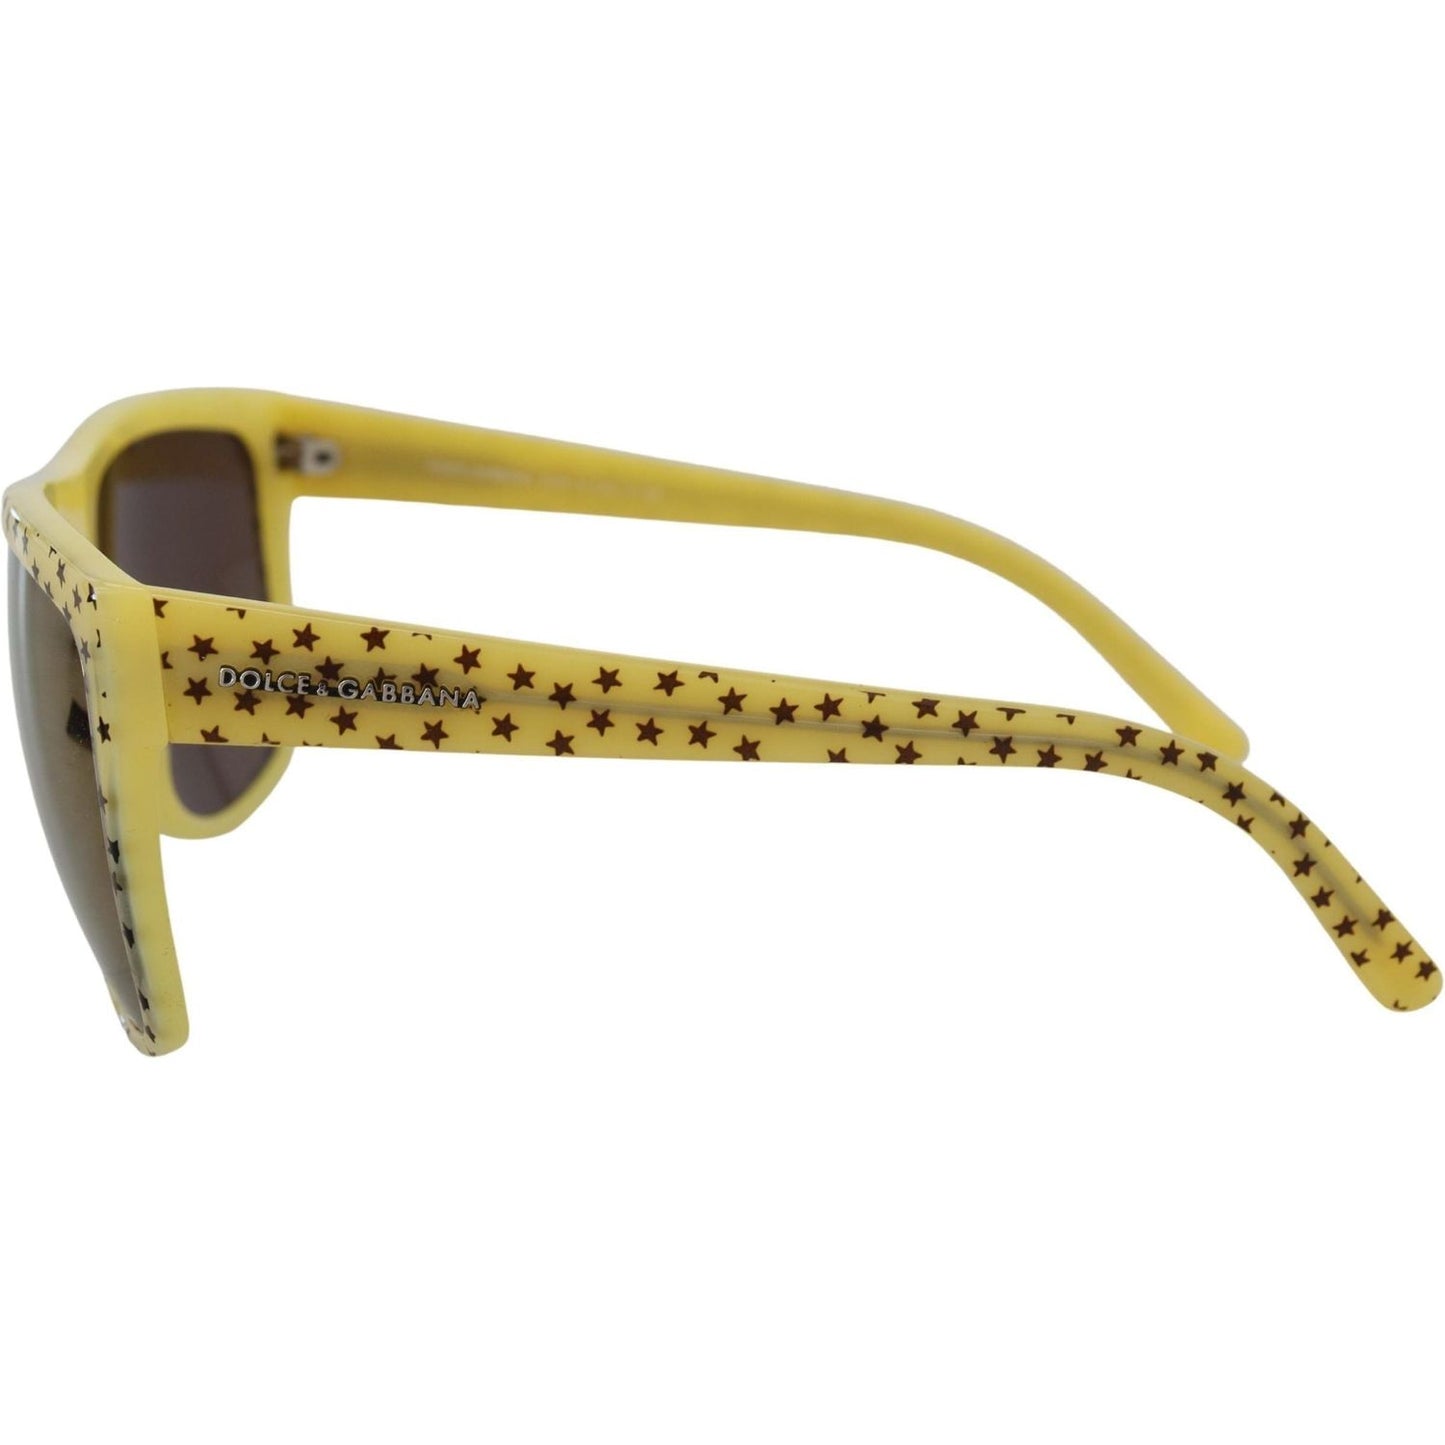 Dolce & Gabbana Stellar Chic Square Sunglasses in Yellow yellow-stars-acetate-square-shades-dg4125-sunglasses IMG_5270-scaled-9ed0e4a0-b23.jpg